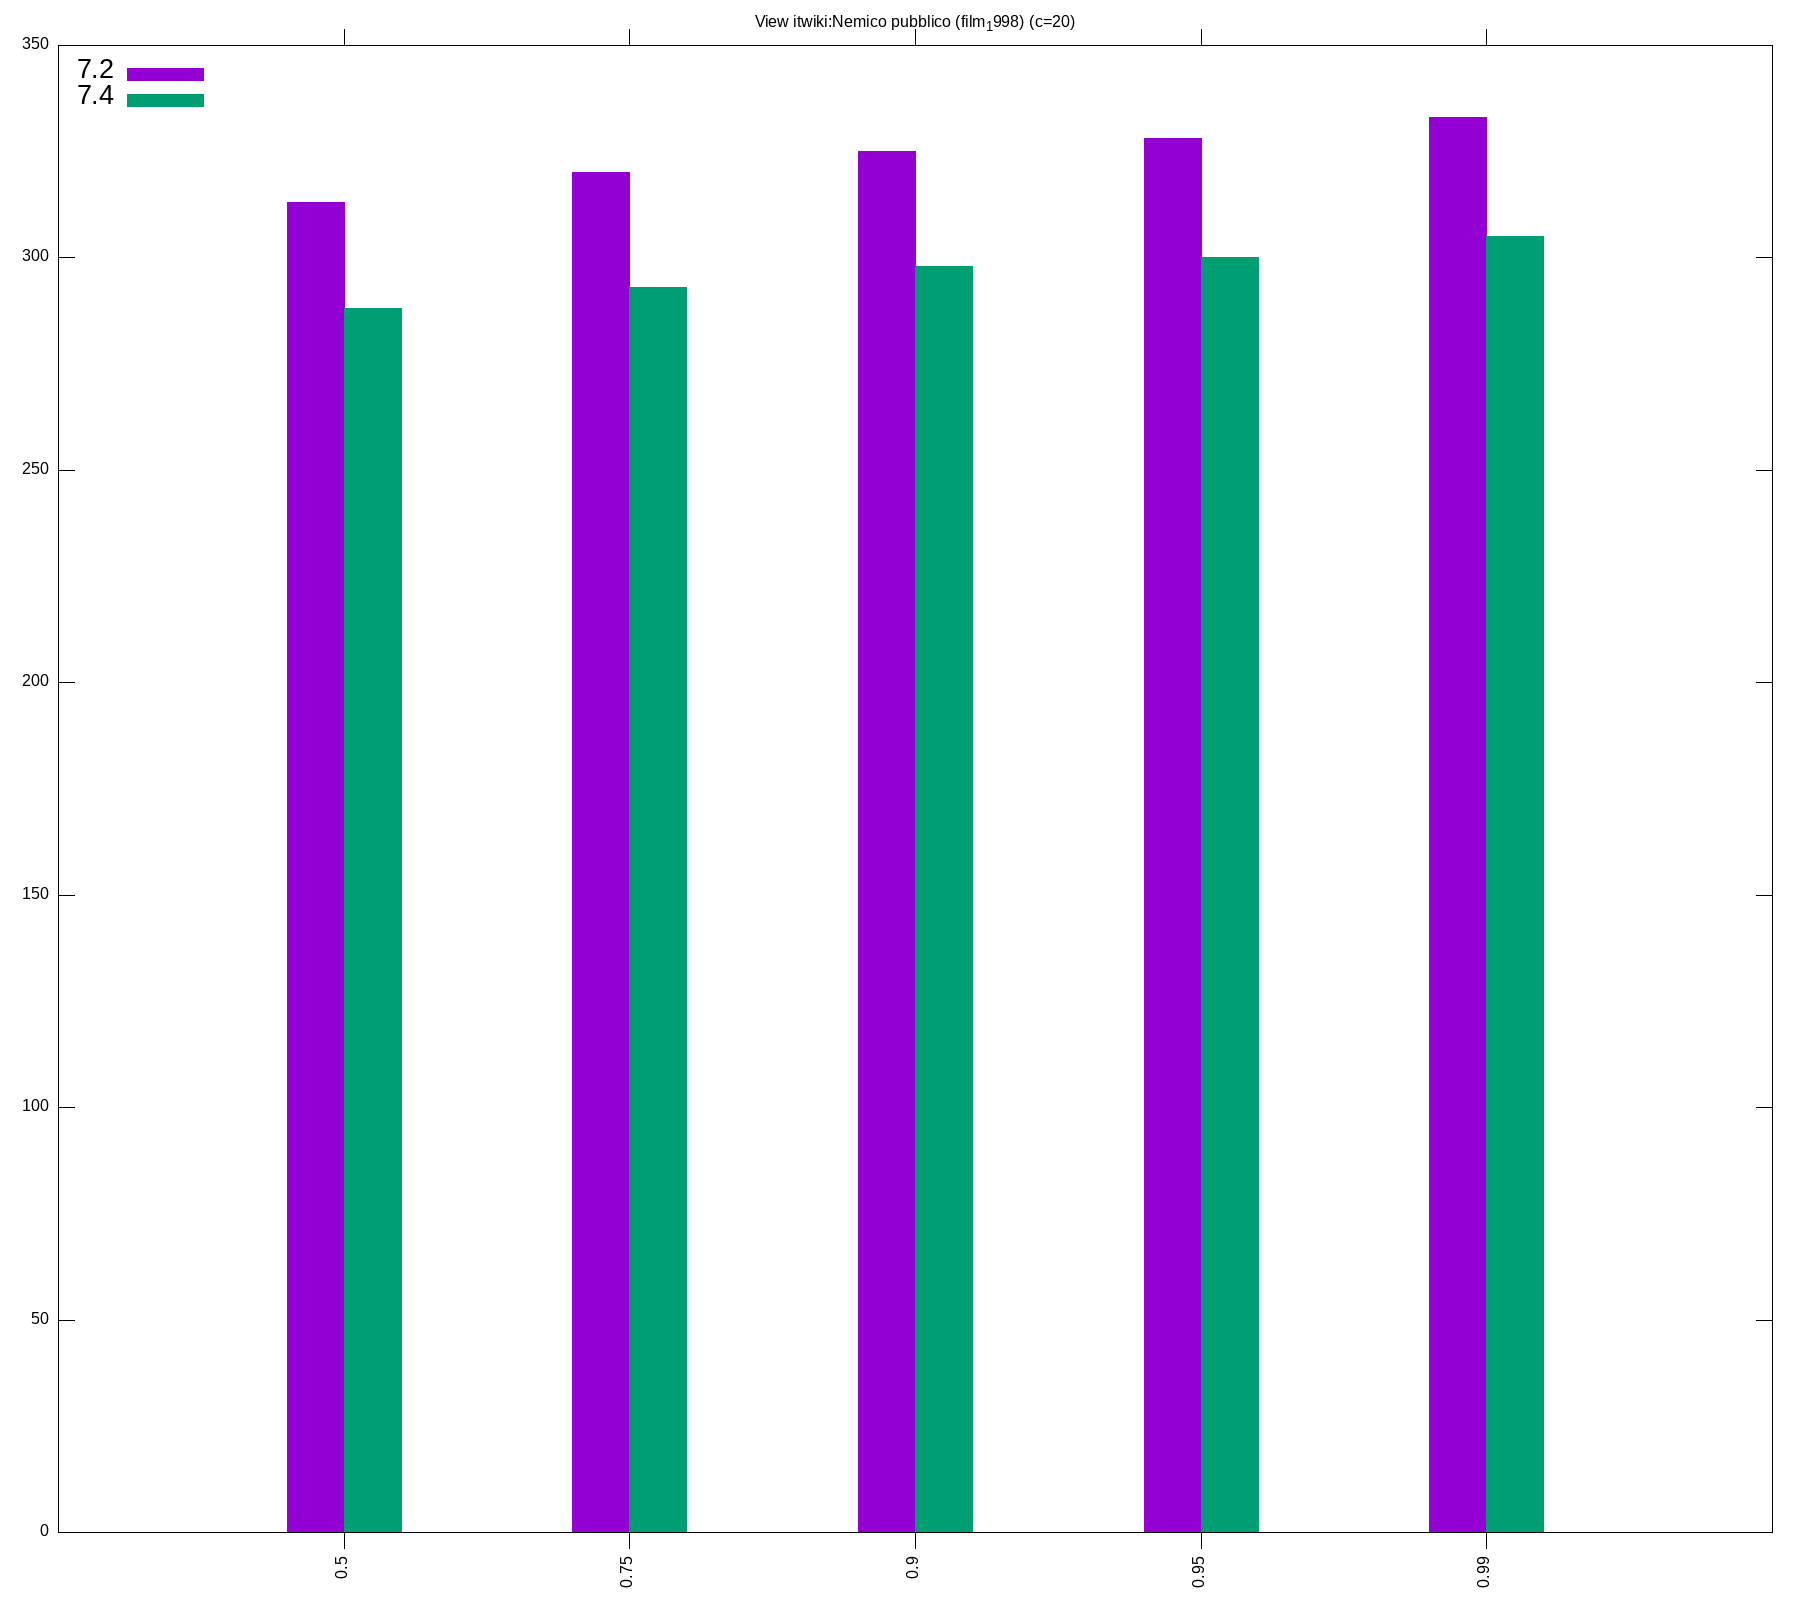 percentiles_a_view_short_c20.png (1×1 px, 22 KB)